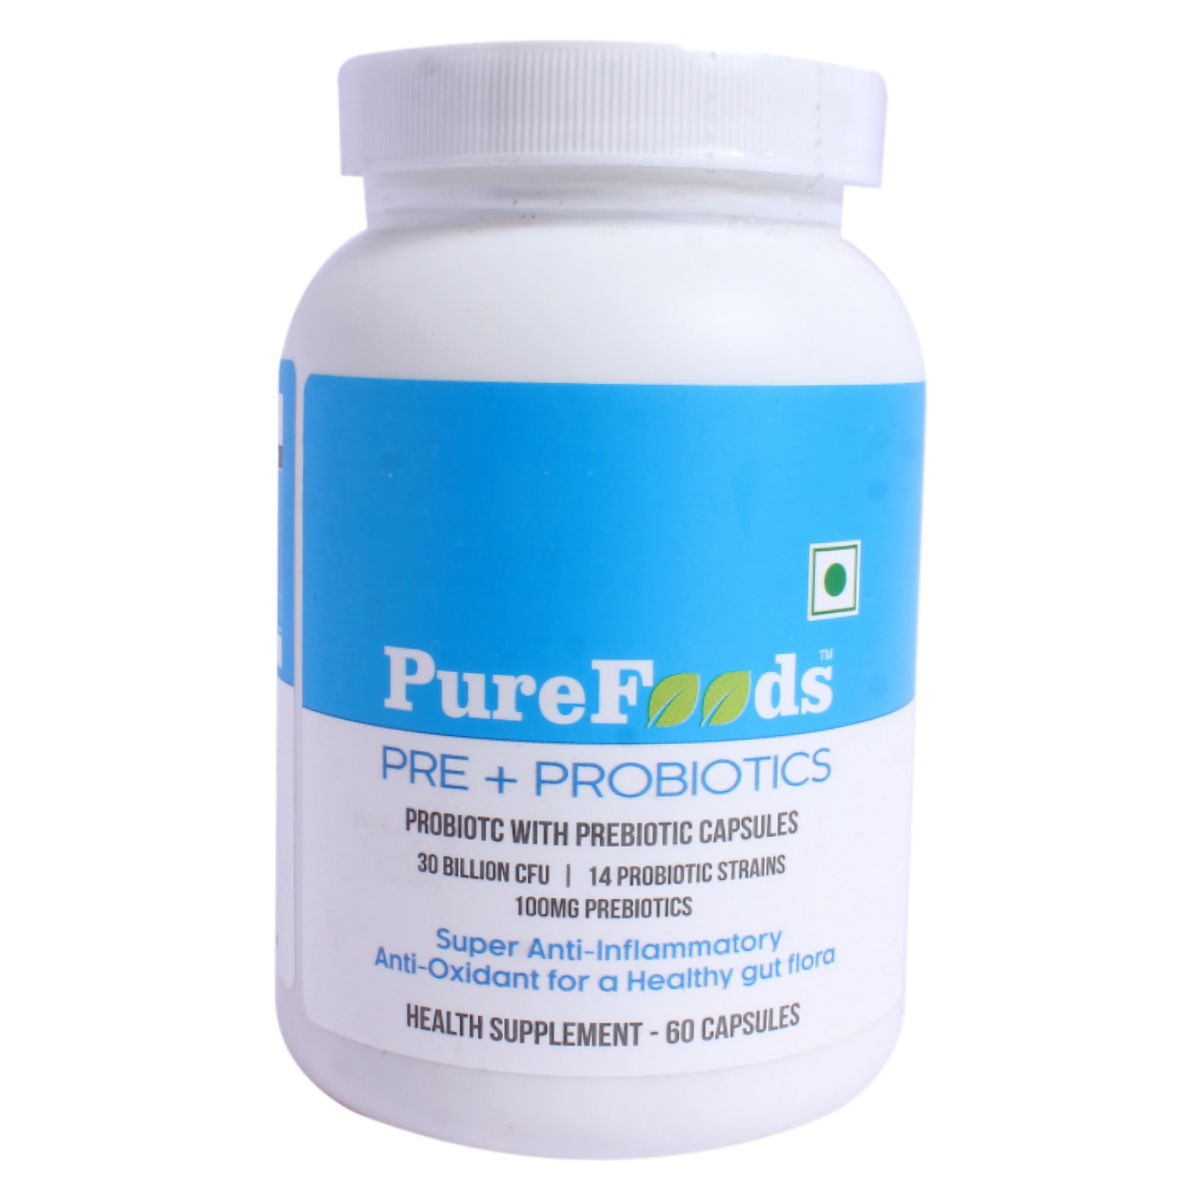 Buy PureFoods Prebiotic + Probiotic, 60 Capsules Online